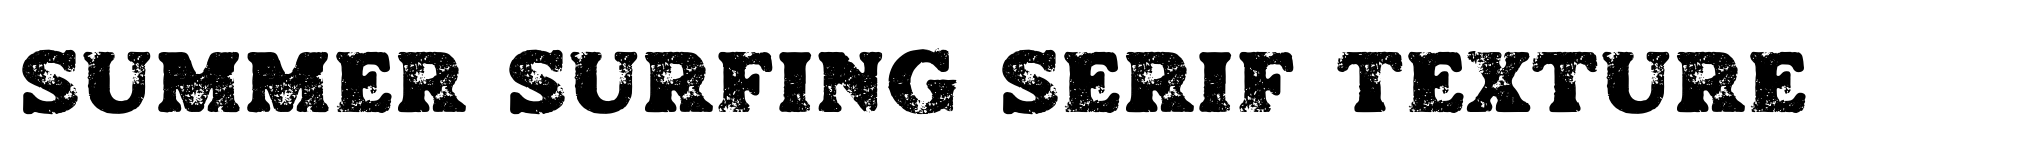 Summer Surfing Serif Texture image